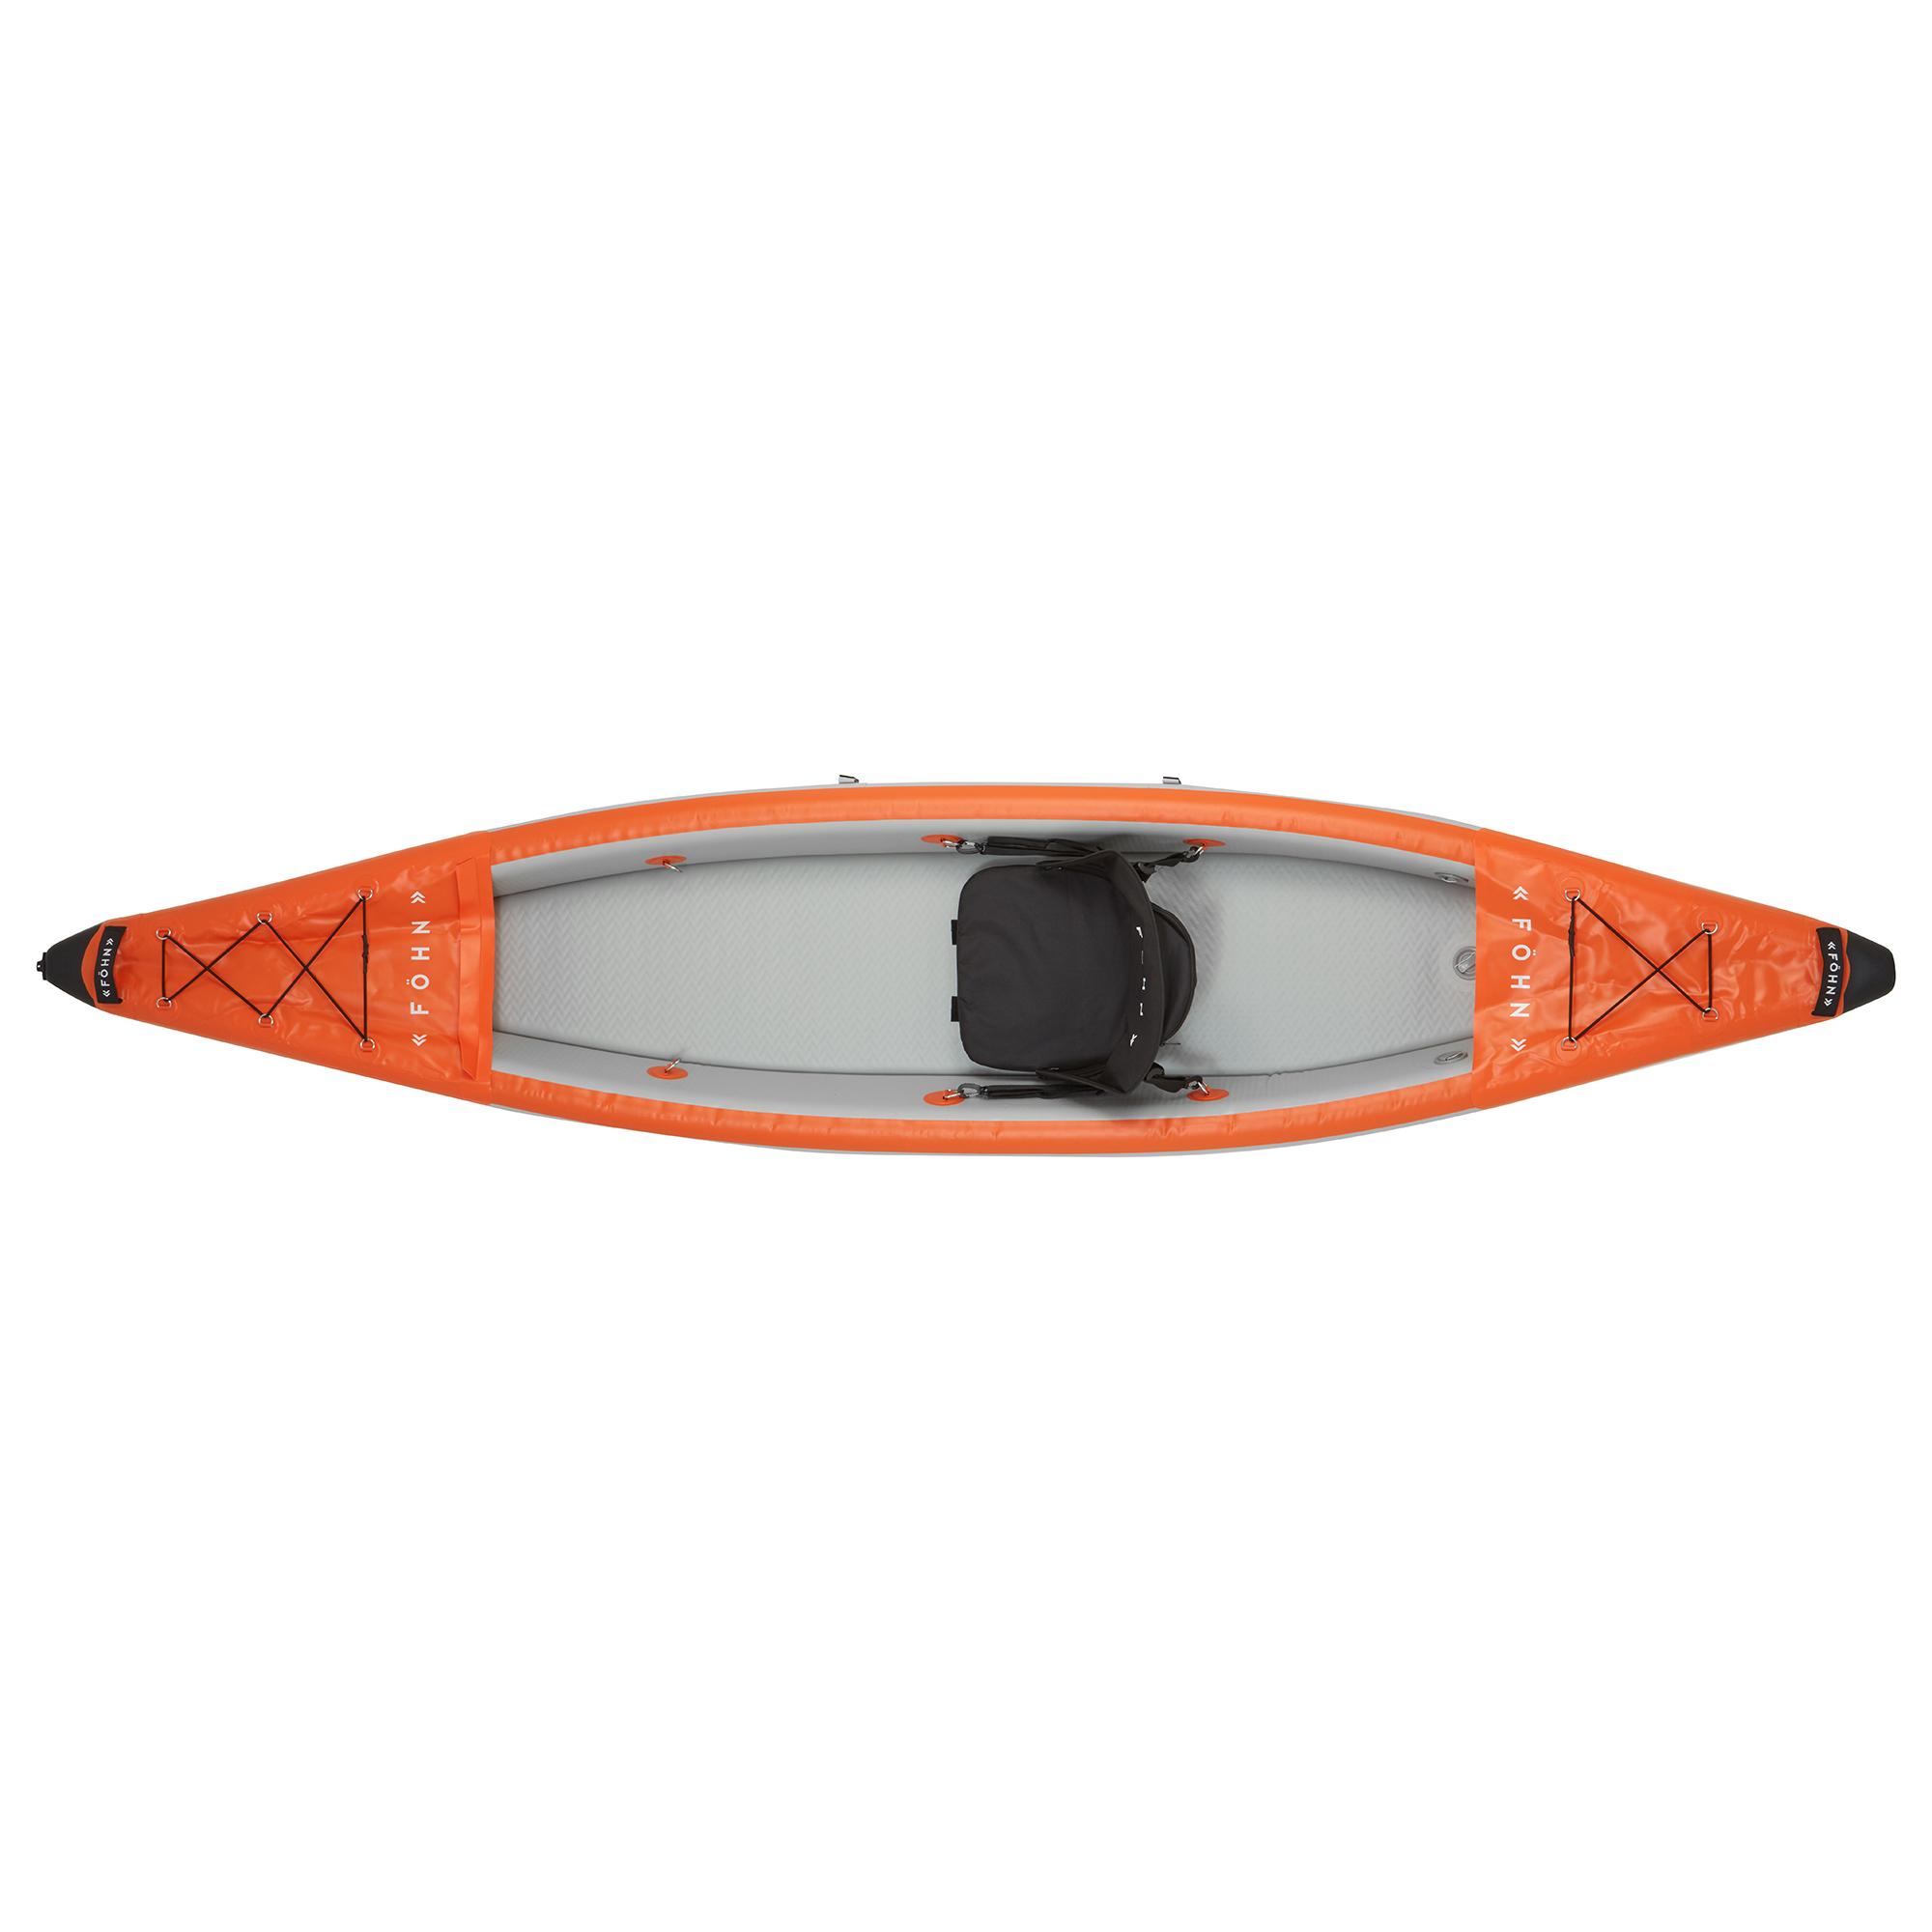 Fhn Adventure High Pressure Kayak (1 Person) - Orange